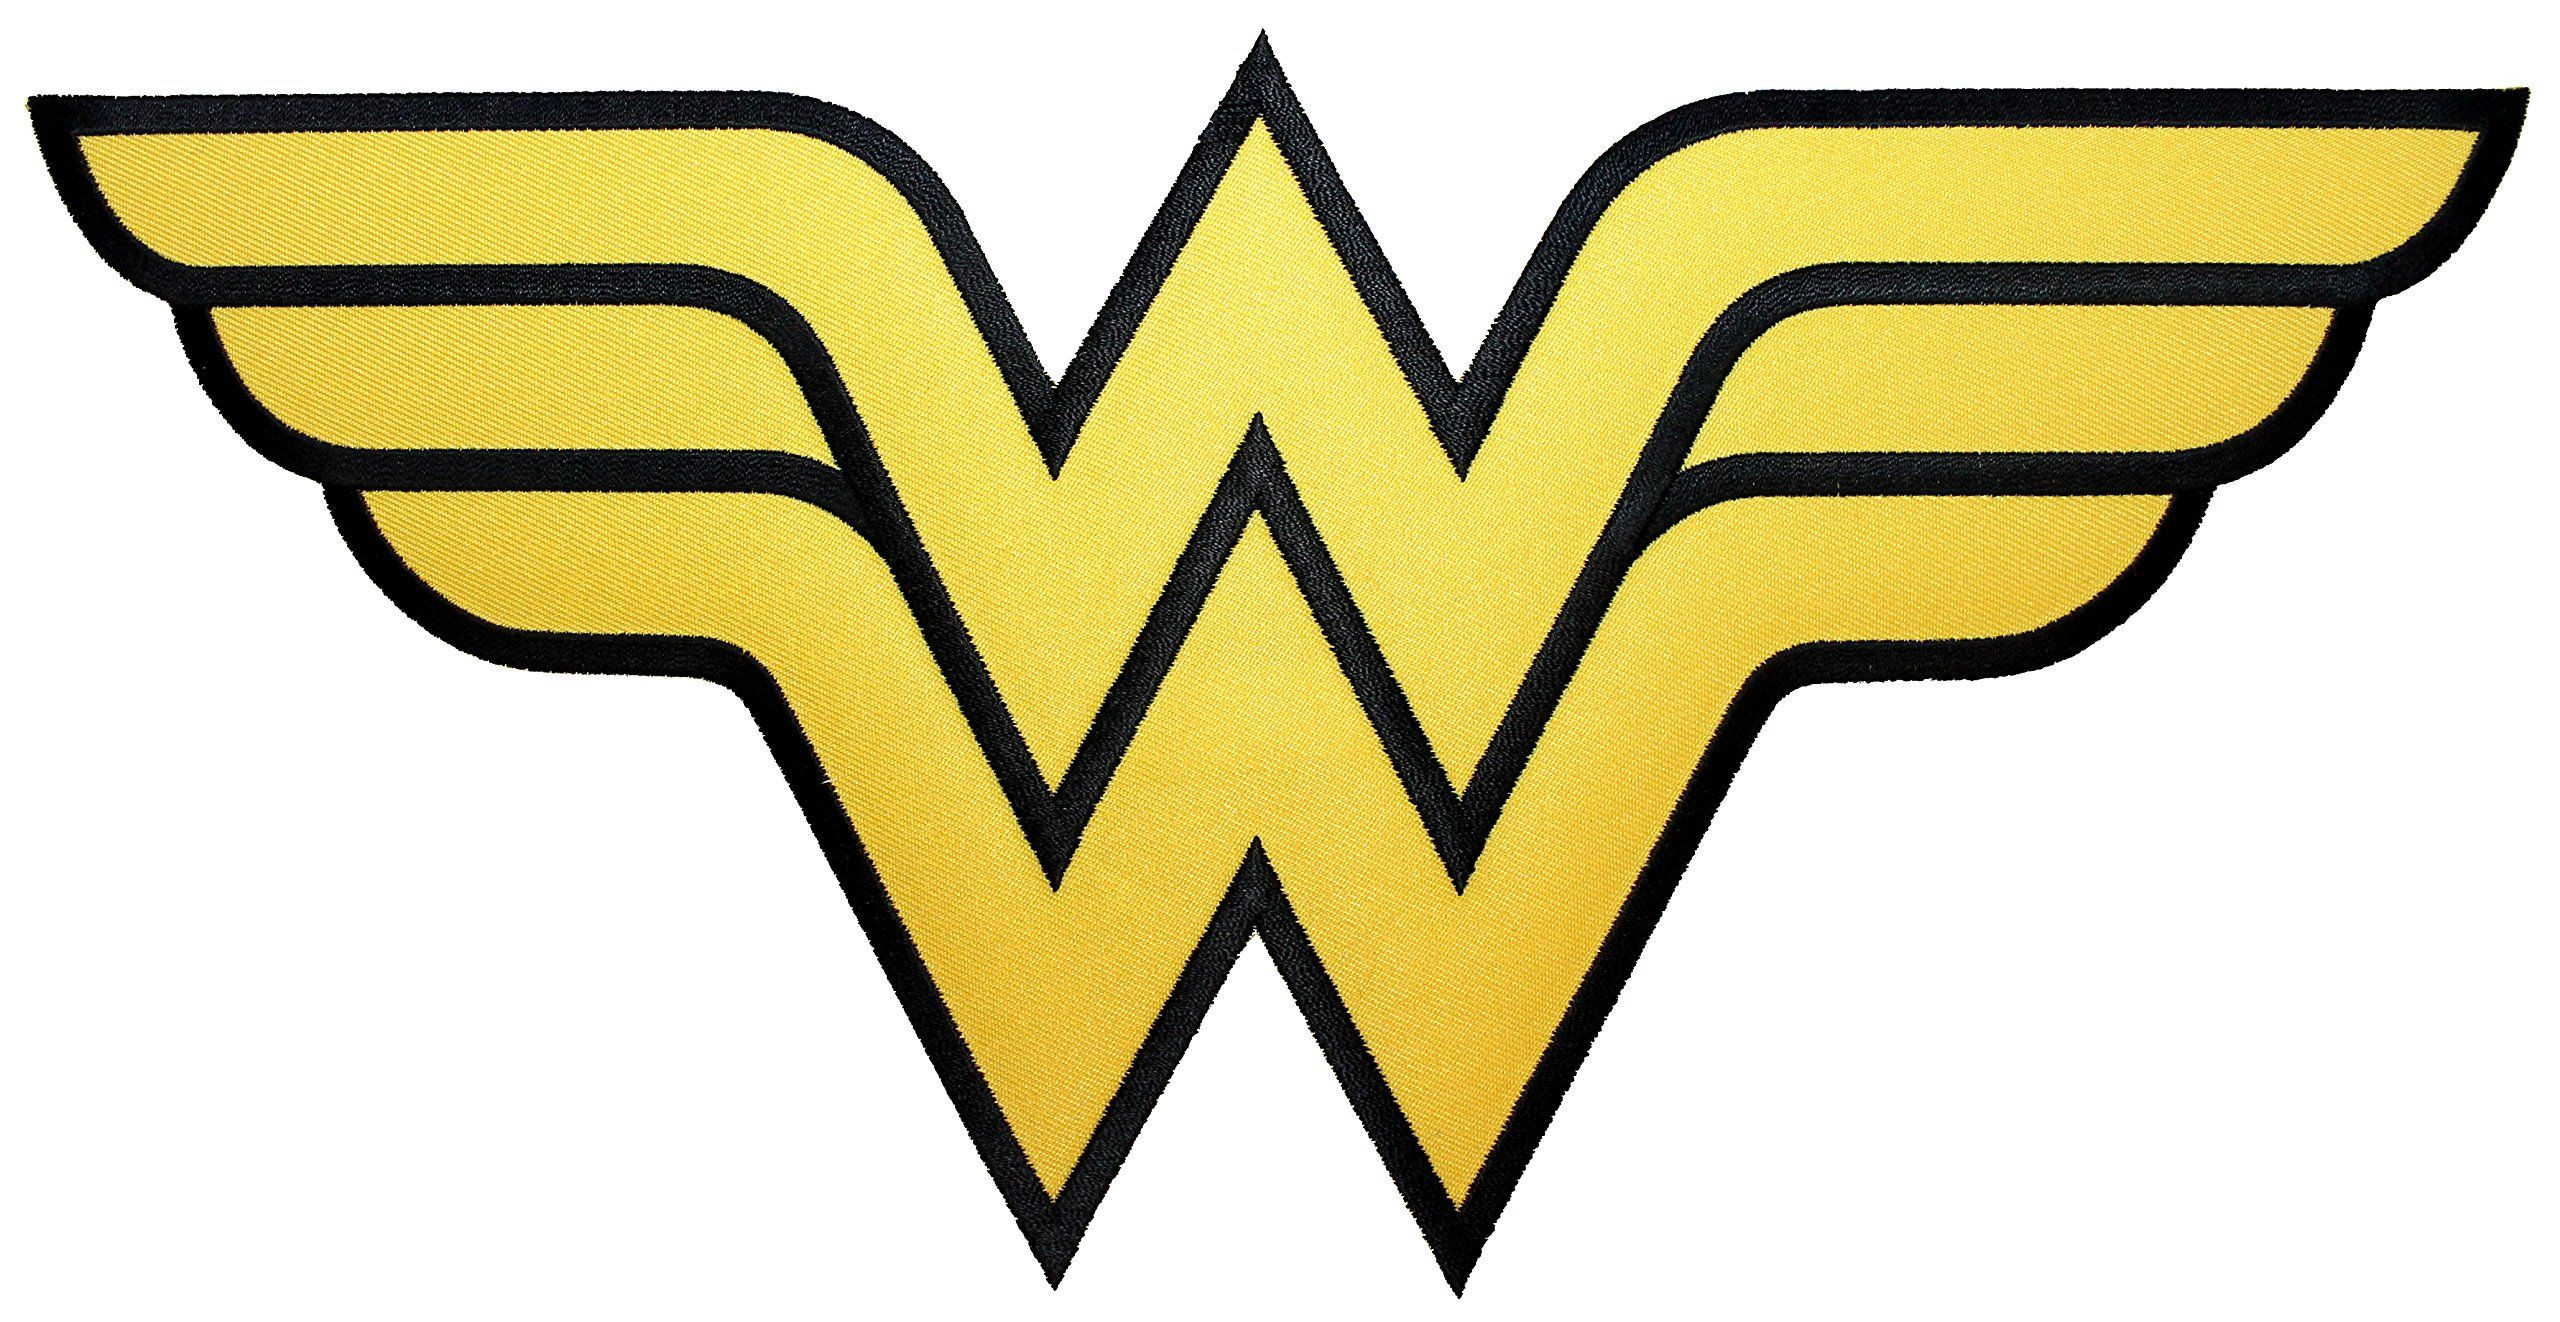 Wonder Woman Silhouette SVG Free